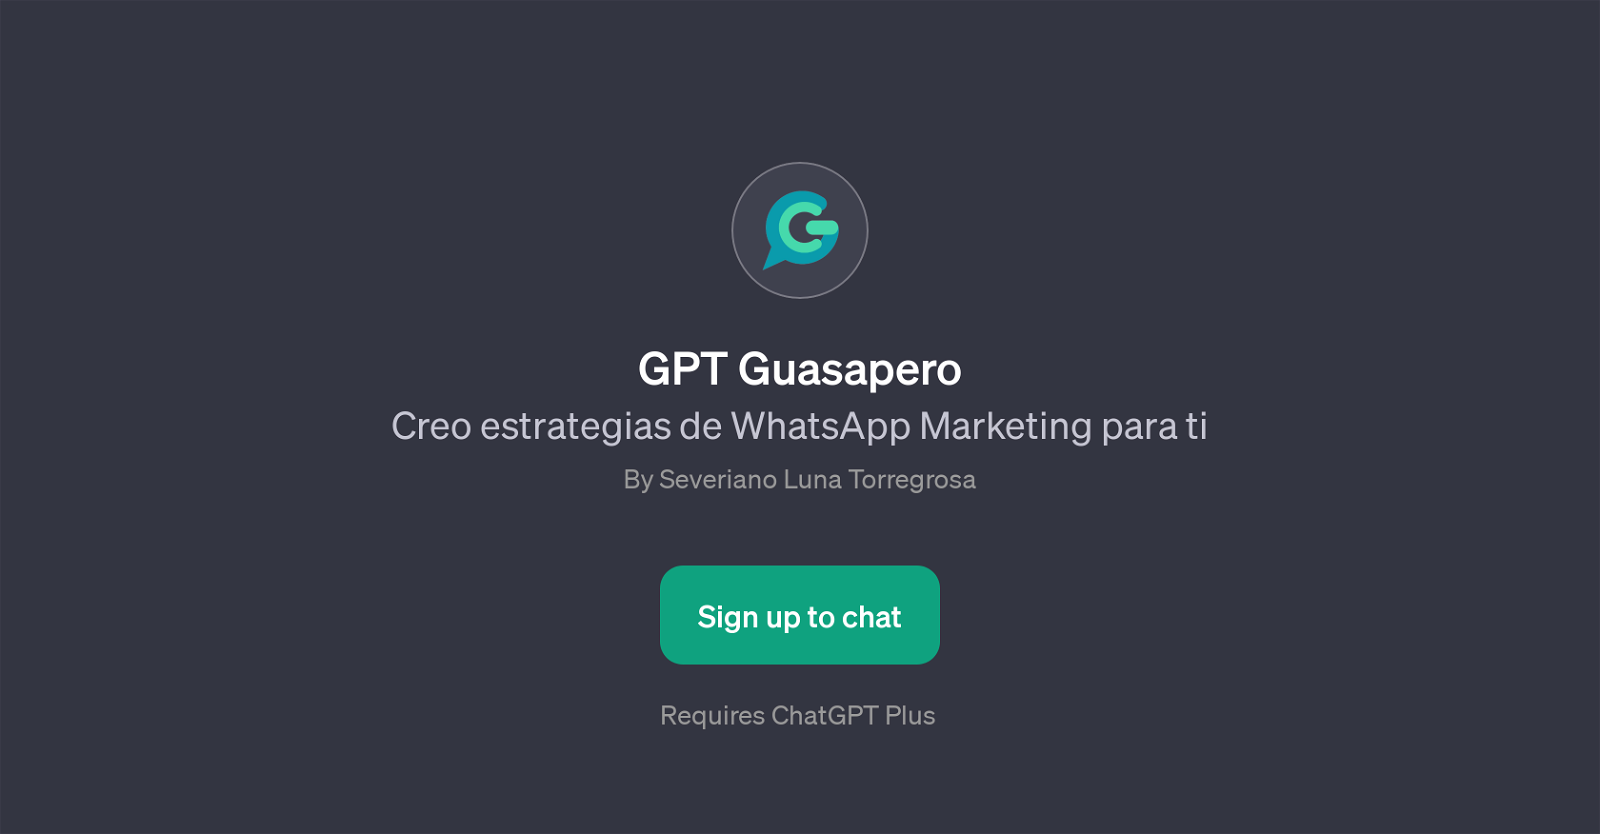 GPT Guasapero website